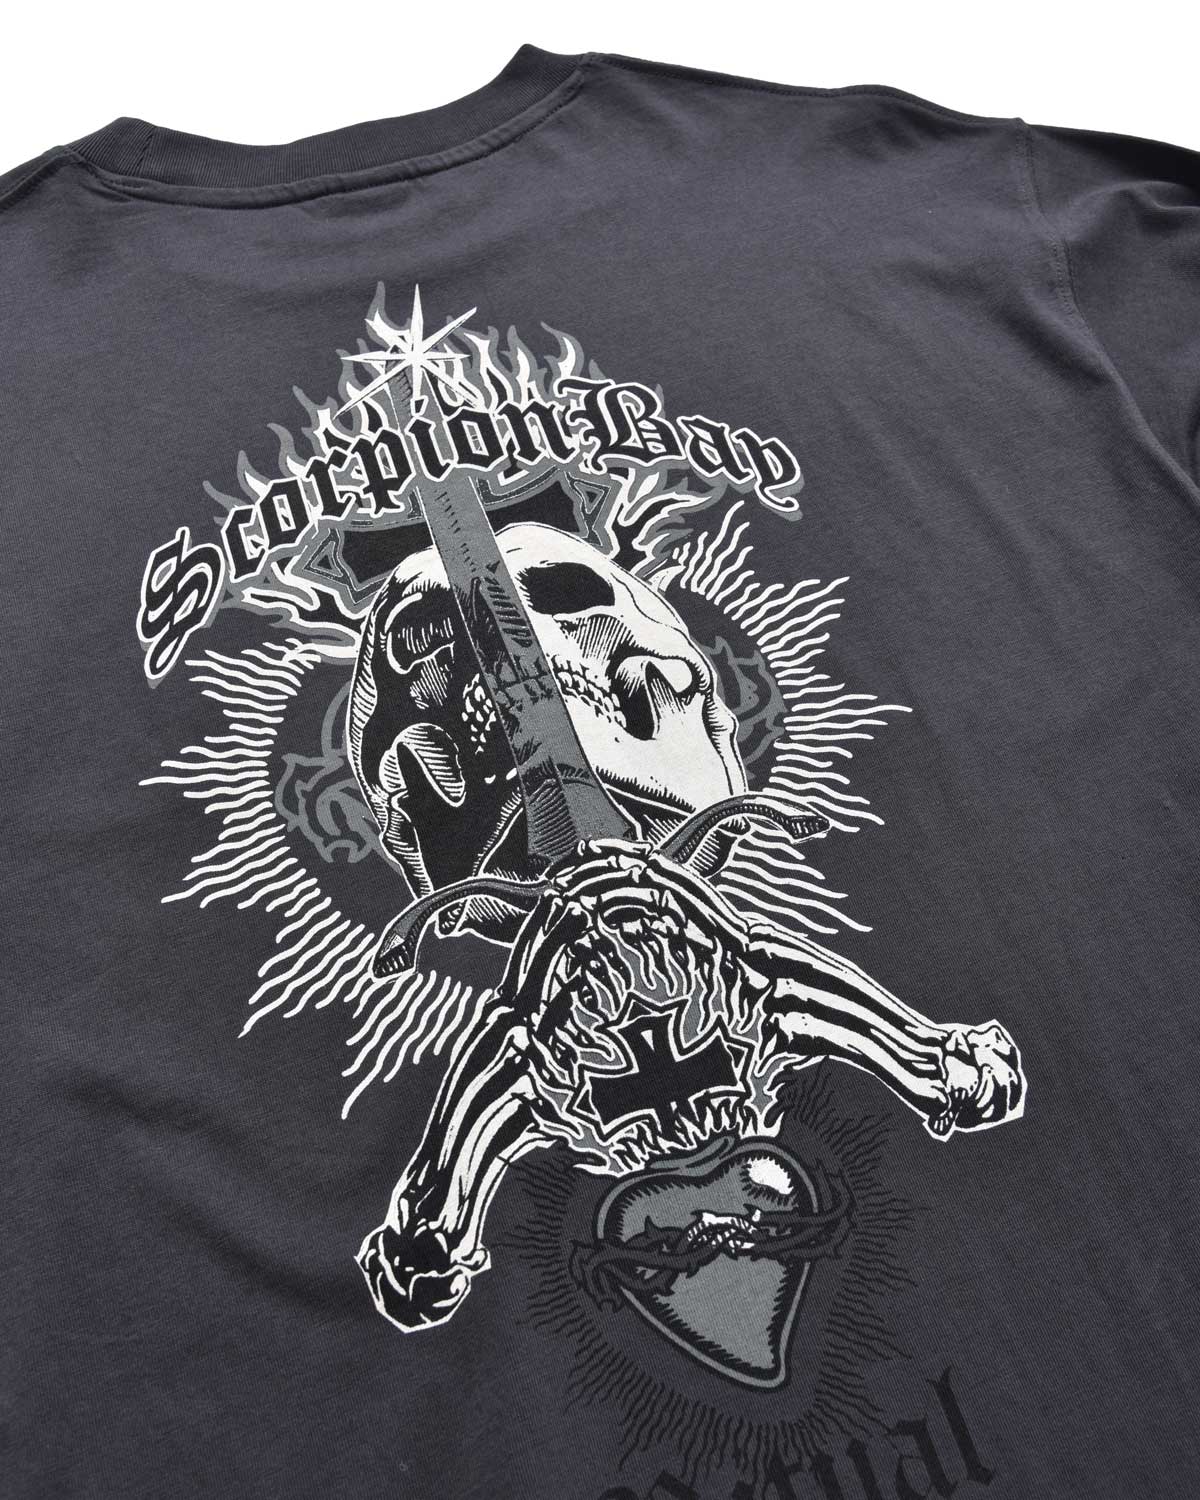 Uomo | T-Shirt Ritual A Maniche Lunghe Og "Skull&Sword" In 100% Cotone